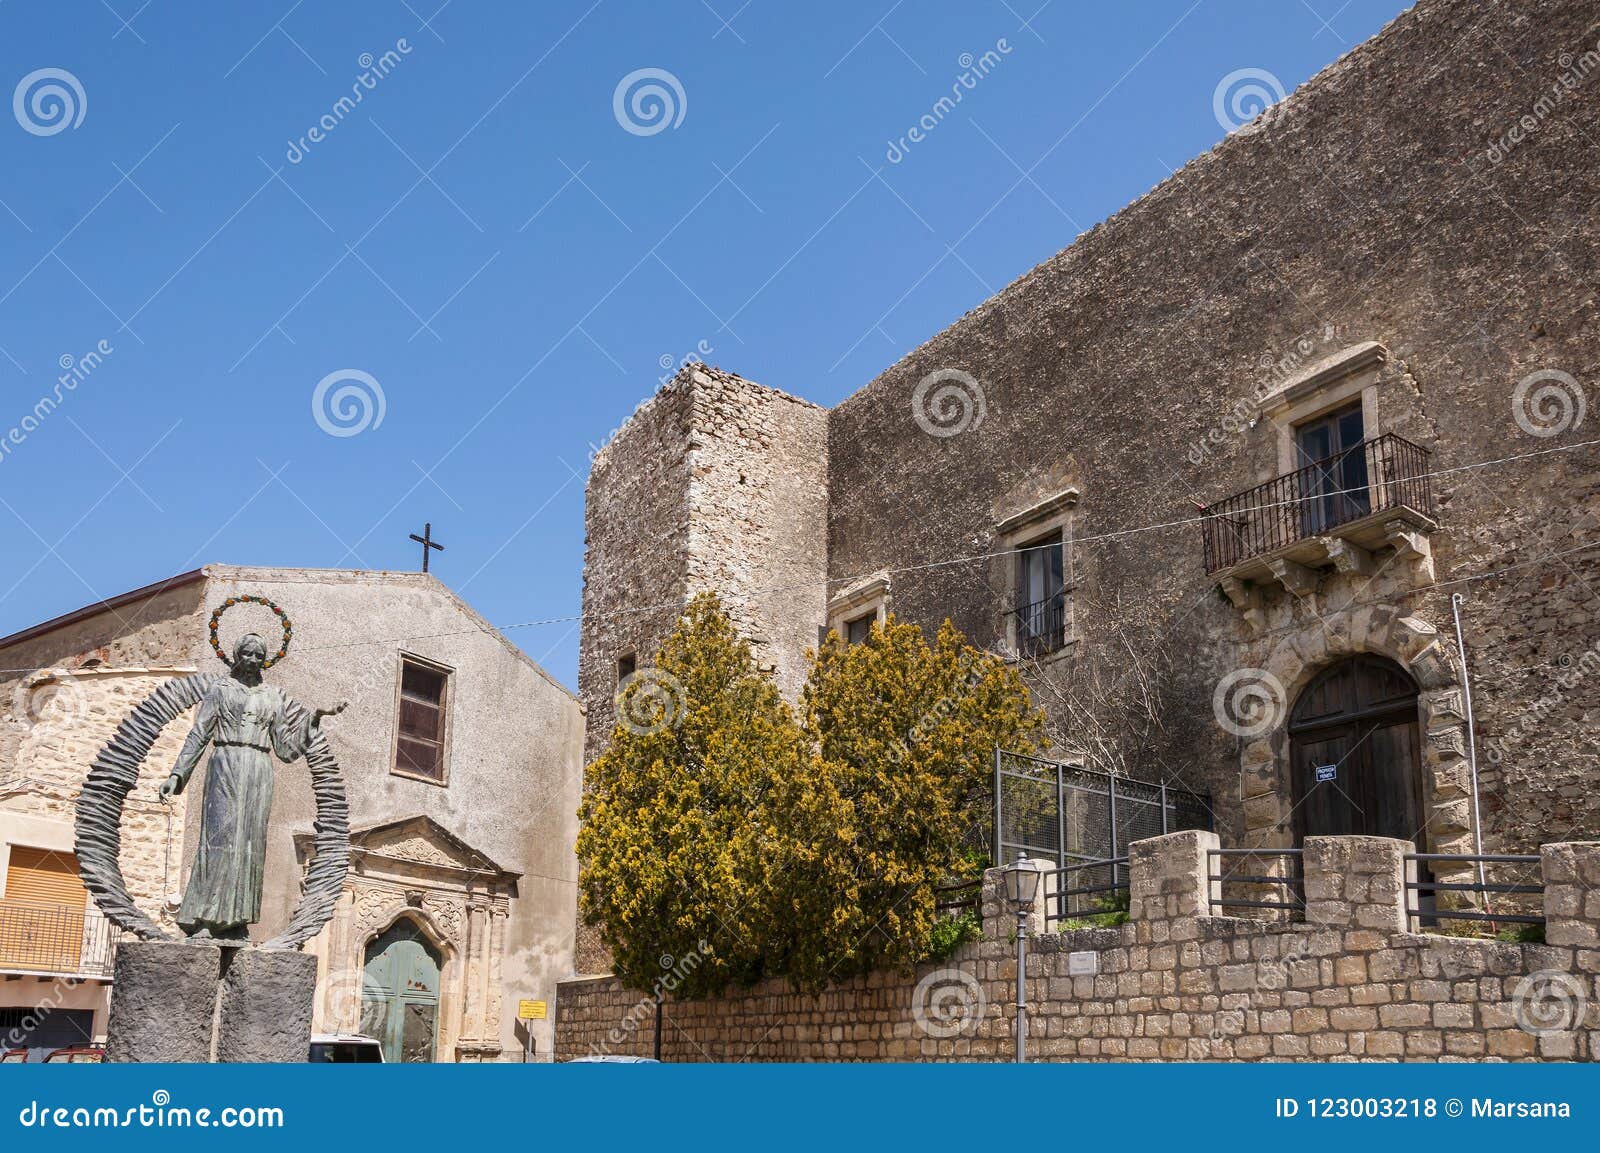 church of sant`antonio abate and castle of ventimiglia